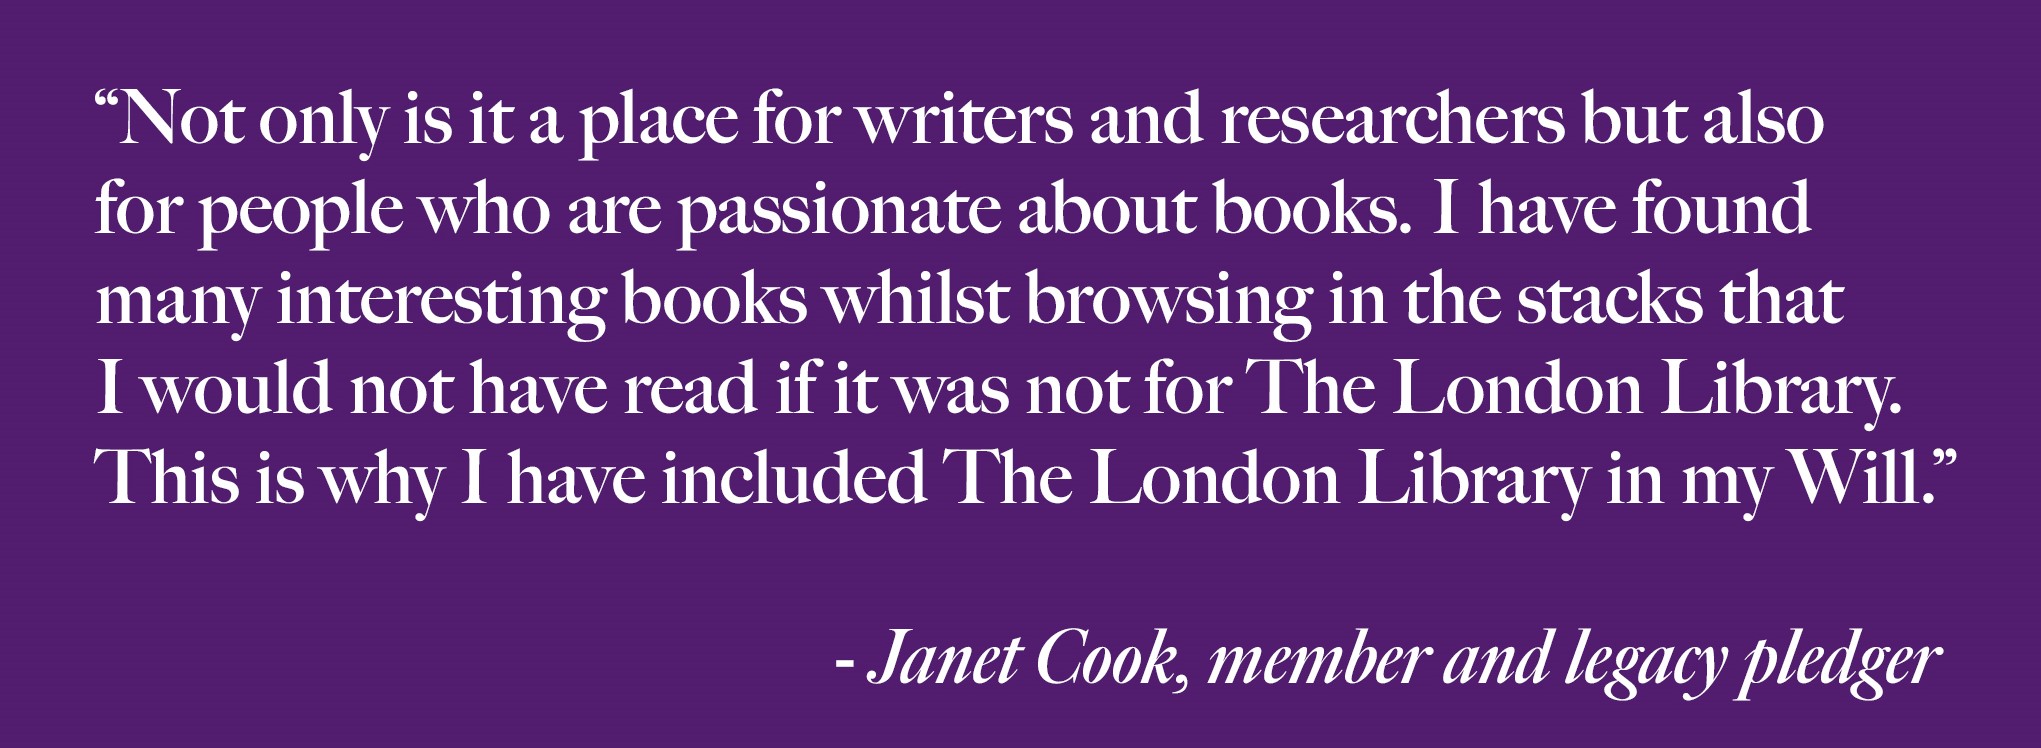 Legacies block Quotes Janet Cook